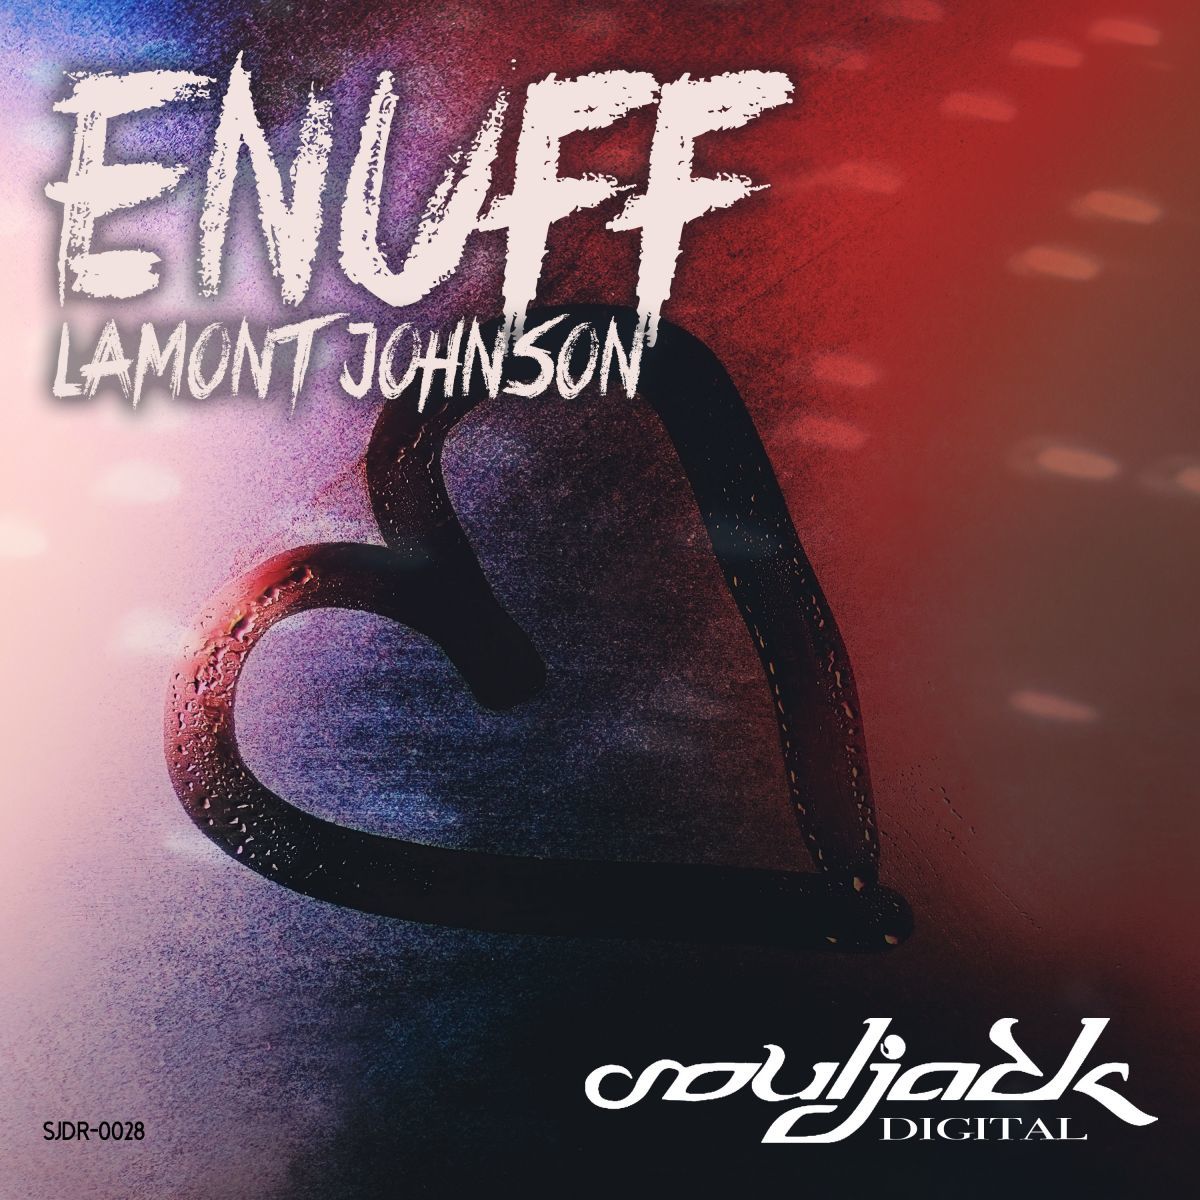 Lamont Johnson - Enuff / SoulJack Digital